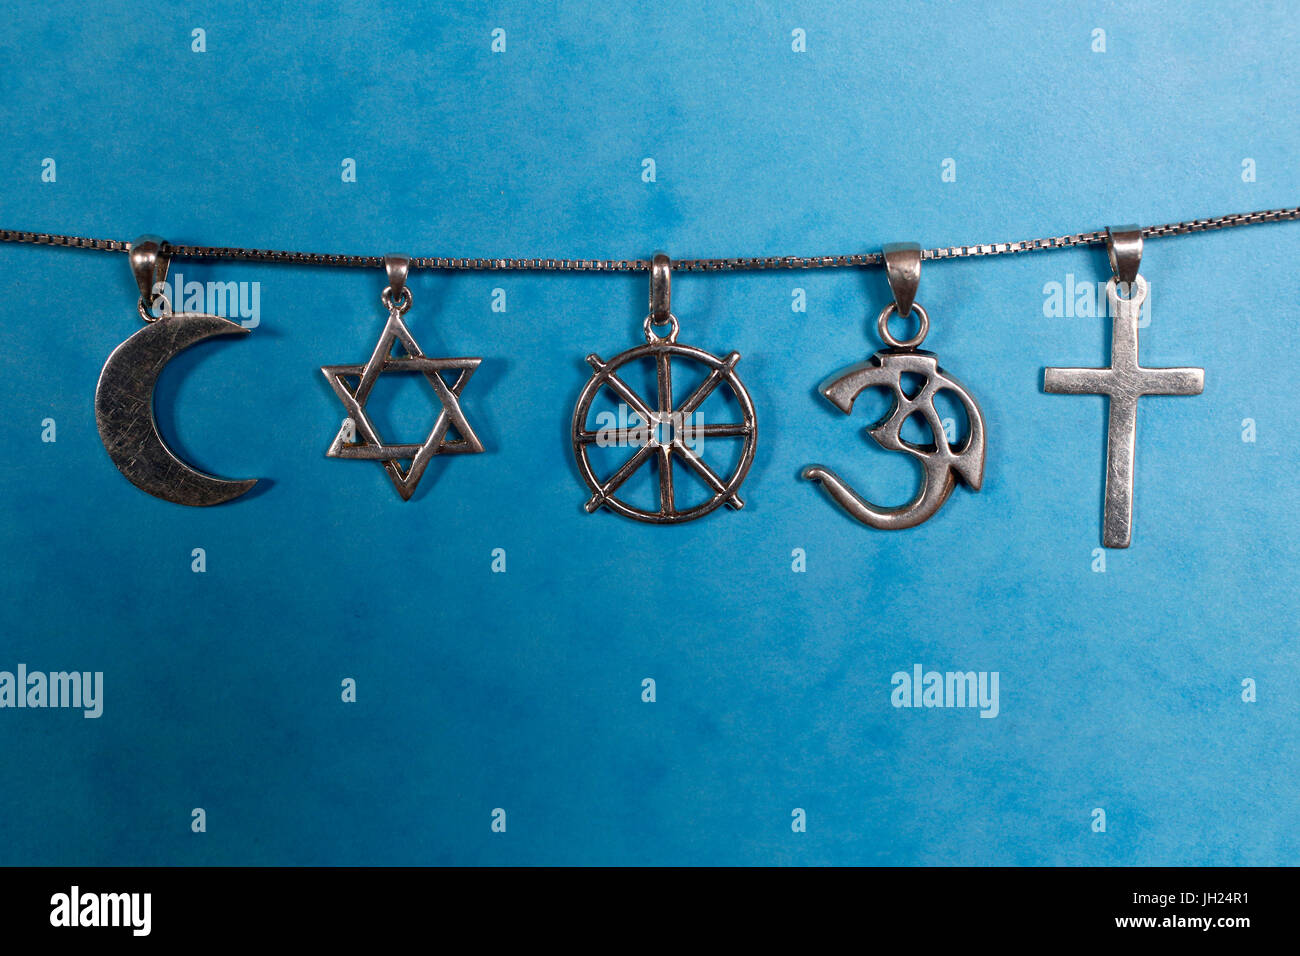 Symbole des Islam, Judentum, Buddhismus, Hinduismus und Christentum. Stockfoto